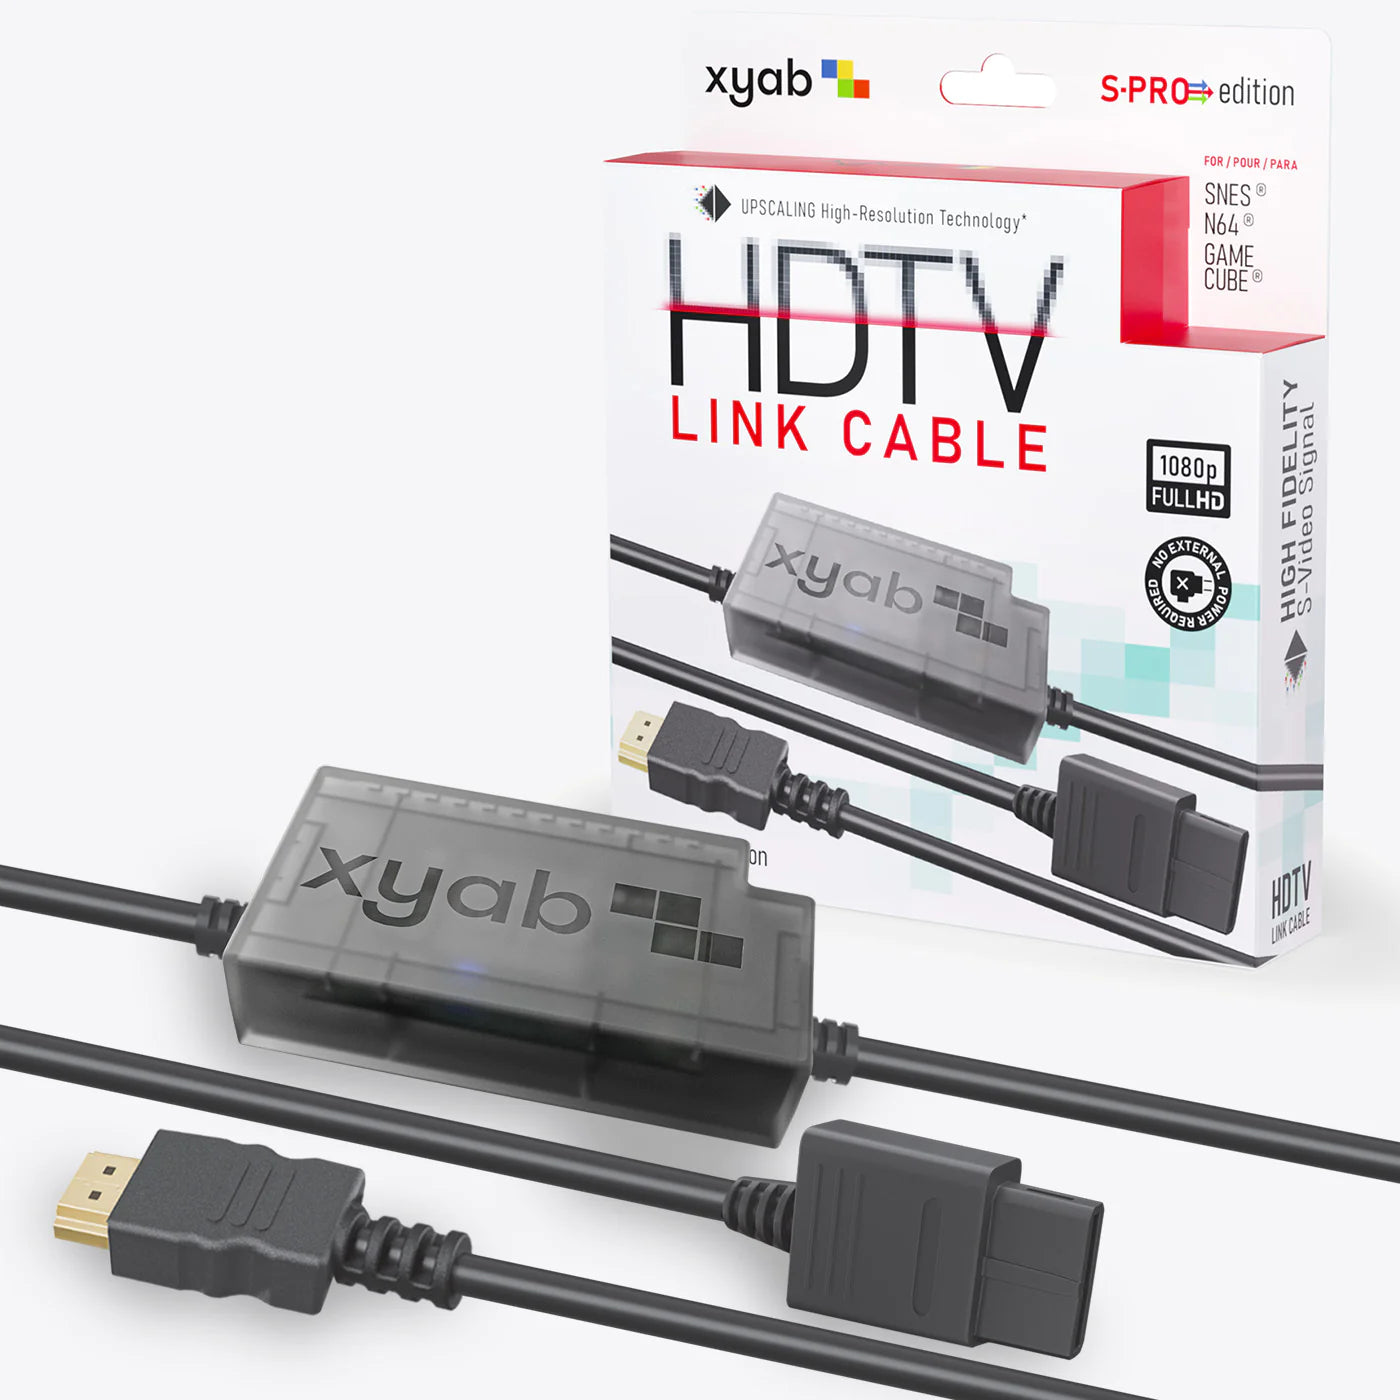 Nintendo ORIGINAL HDMI Cable Grey for Nintendo Wii U Console